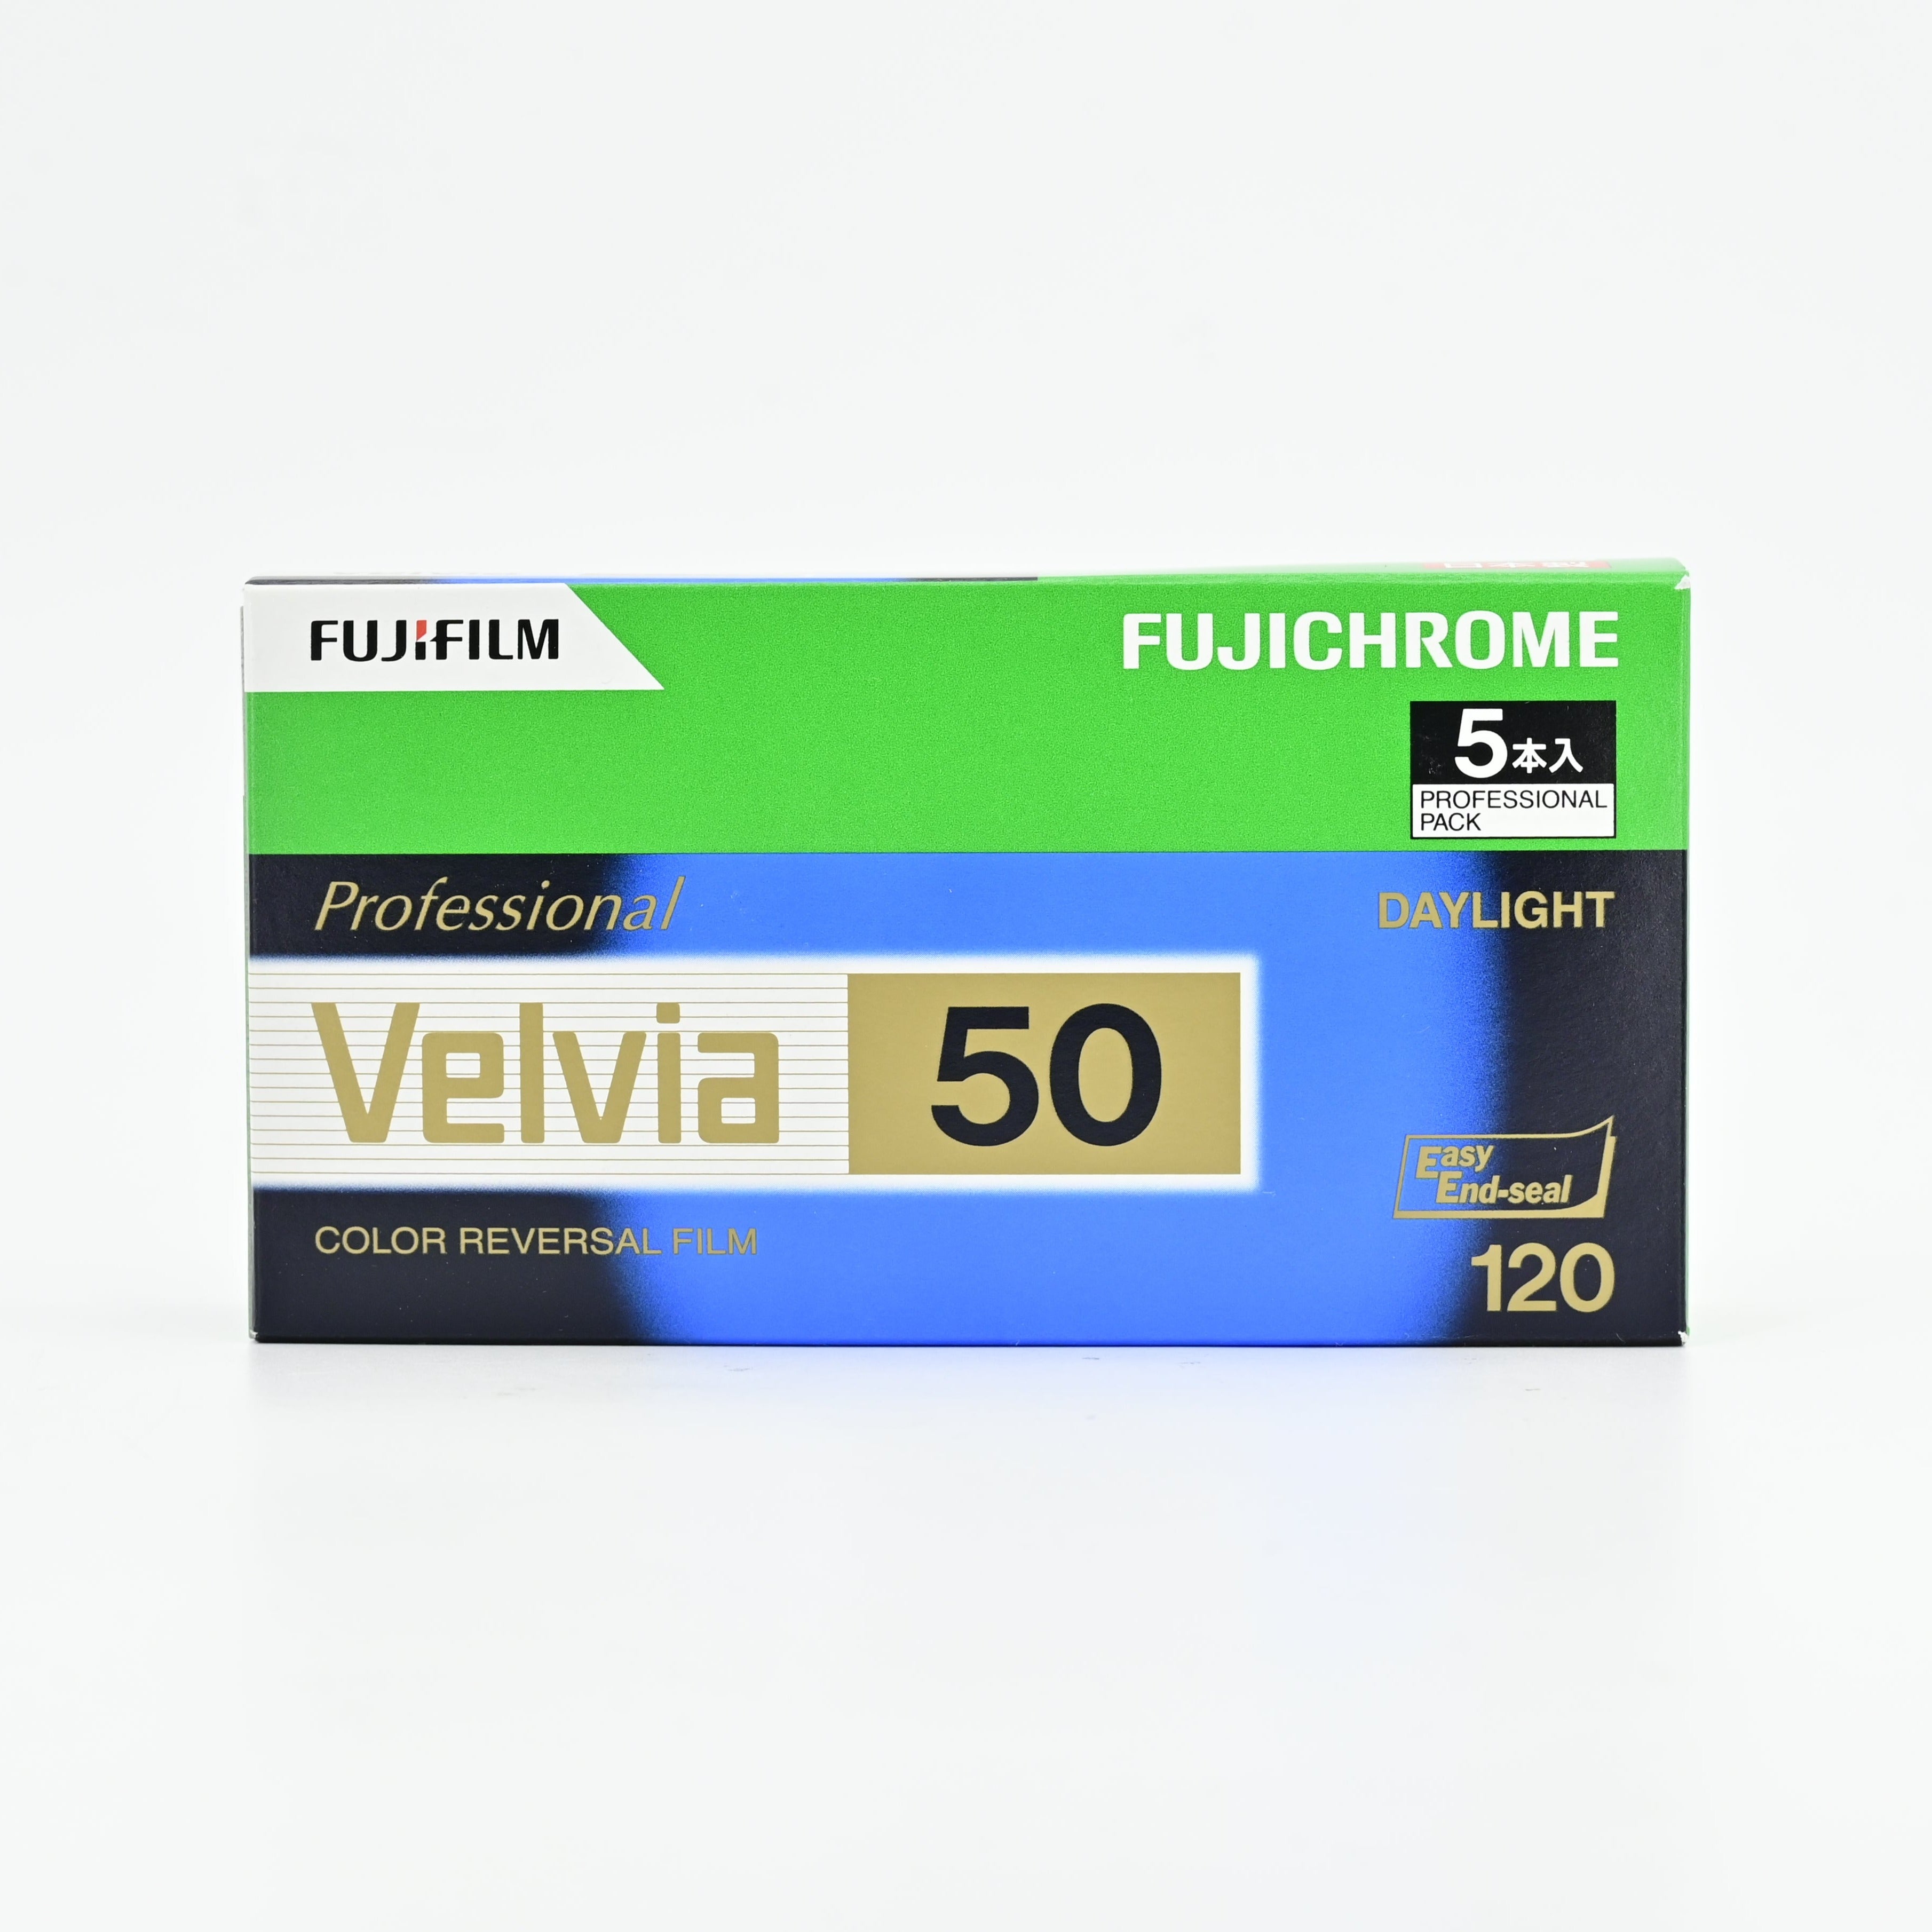 Fujifilm Velvia 50, 120 Film (Single Roll)[Expired]